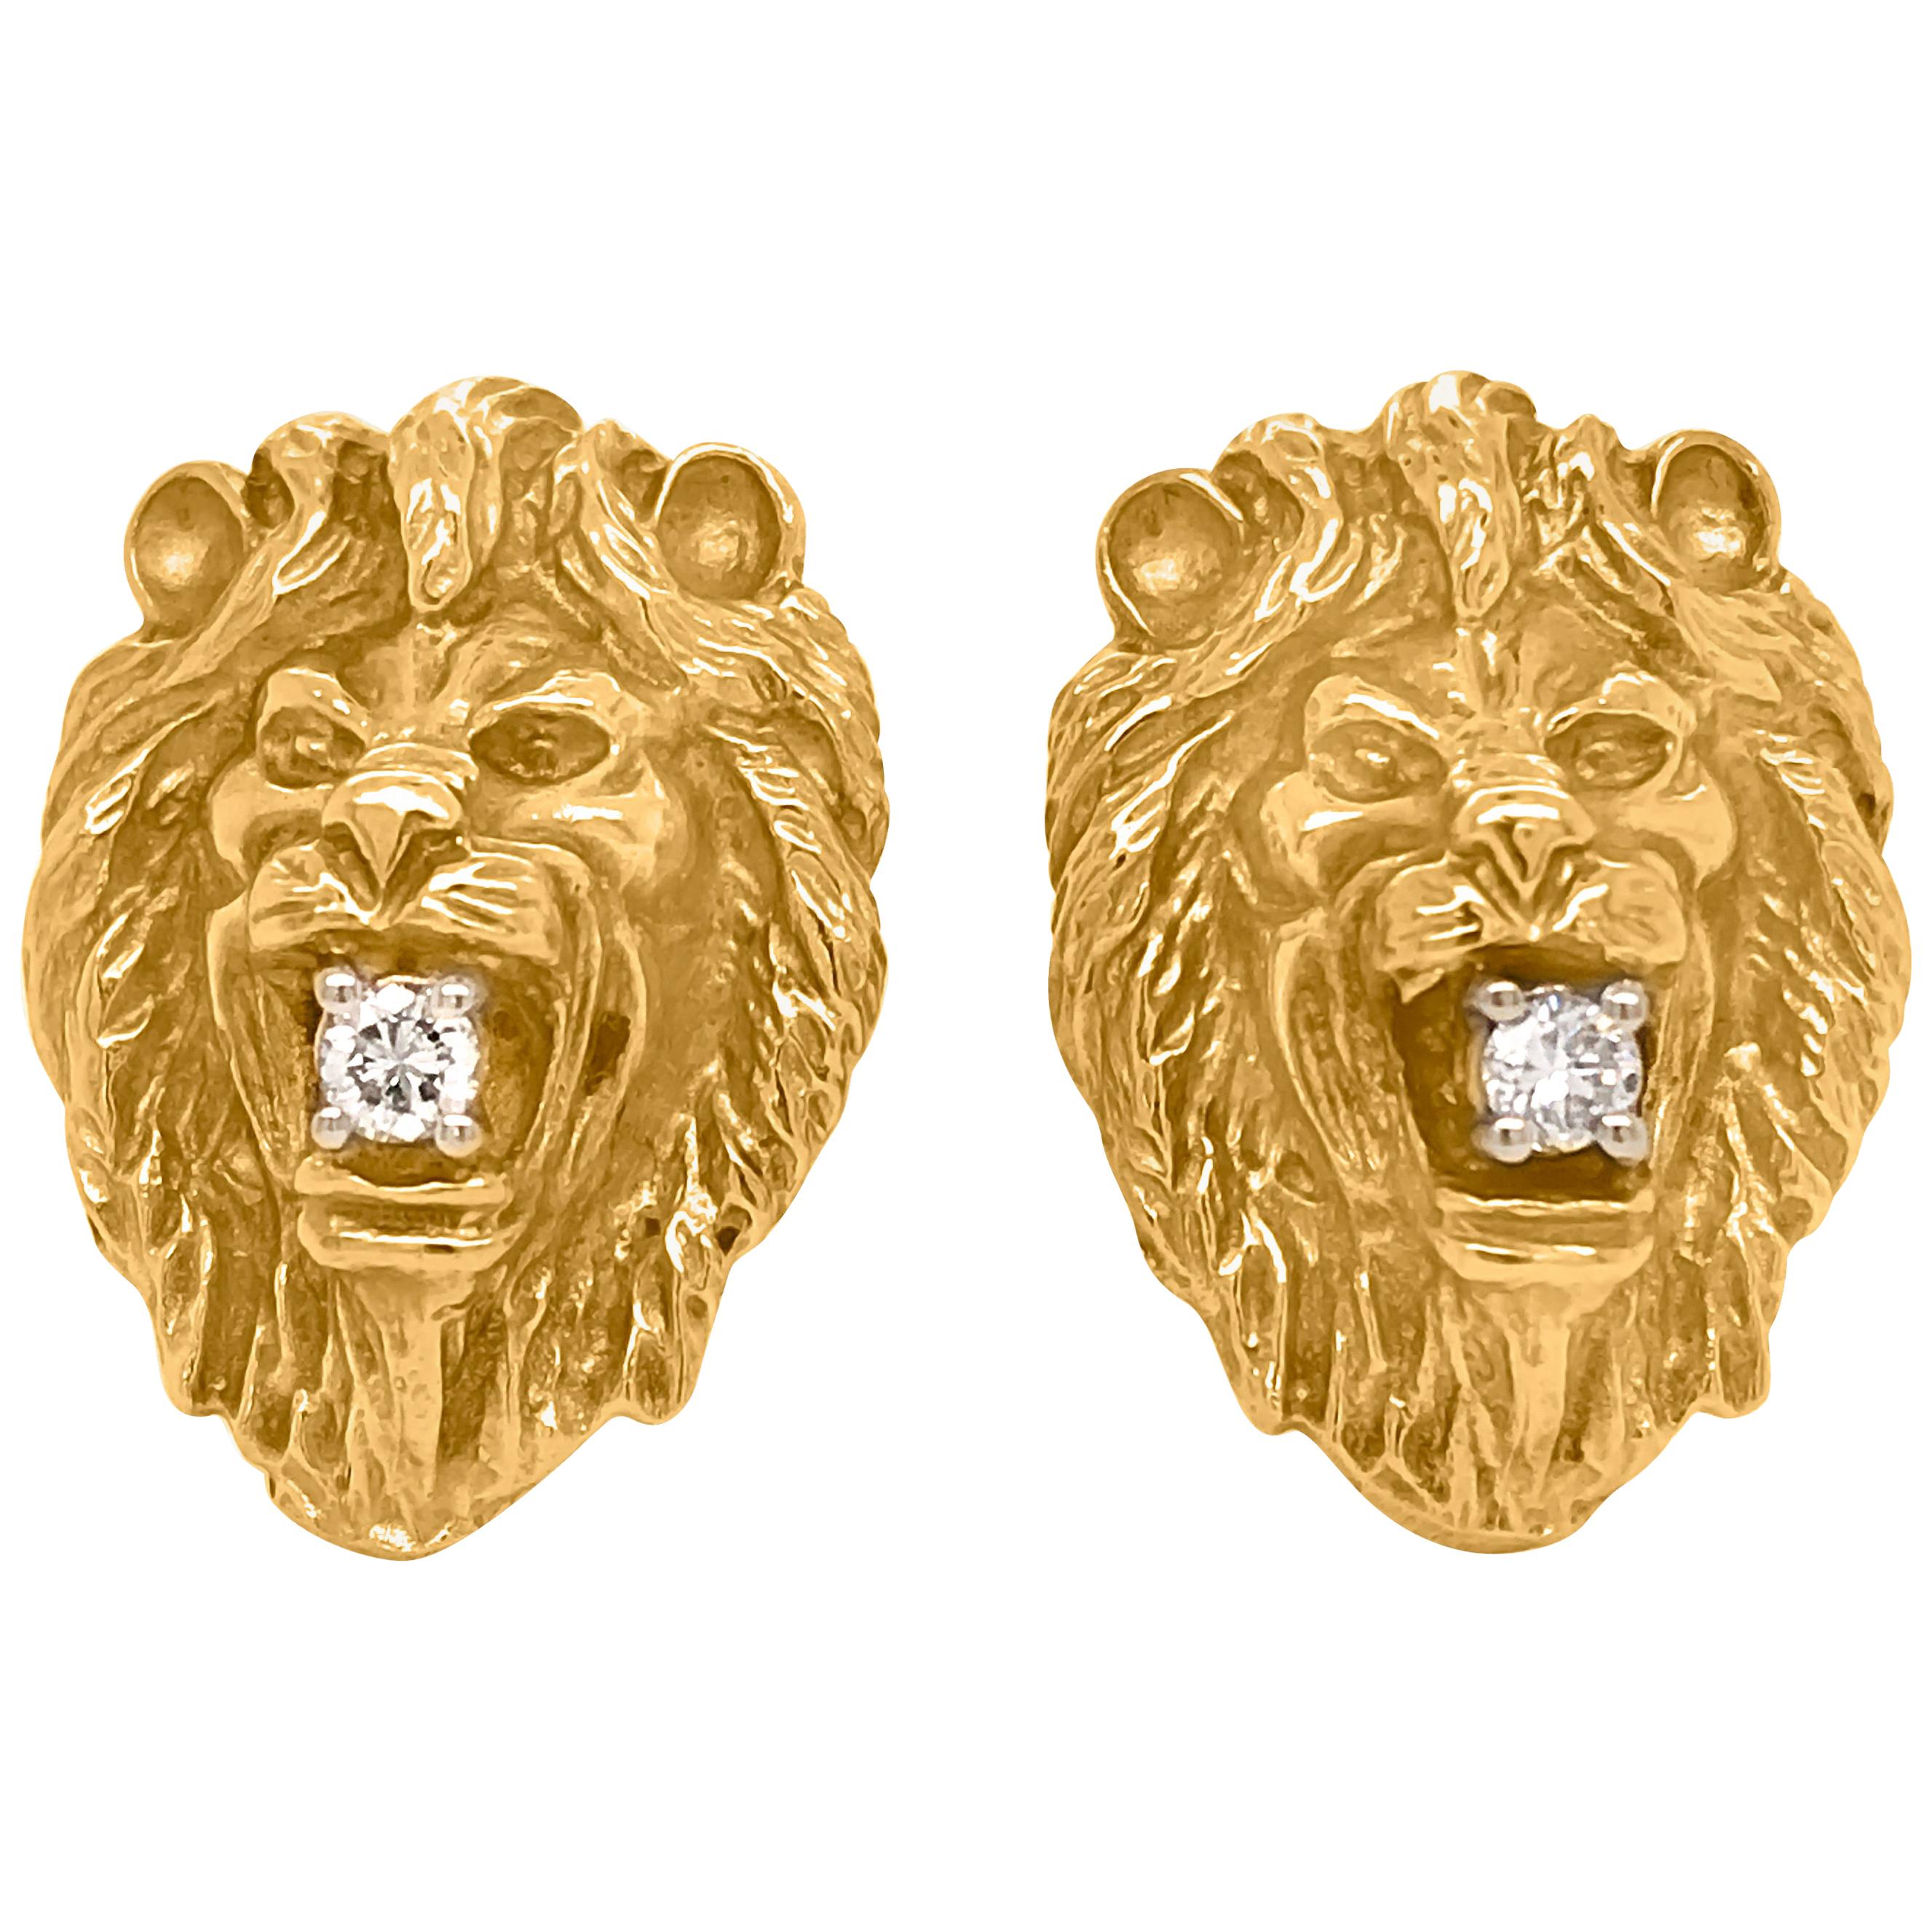 Tyler and Mens Heraldic Lion Capsule Cufflinks Gold